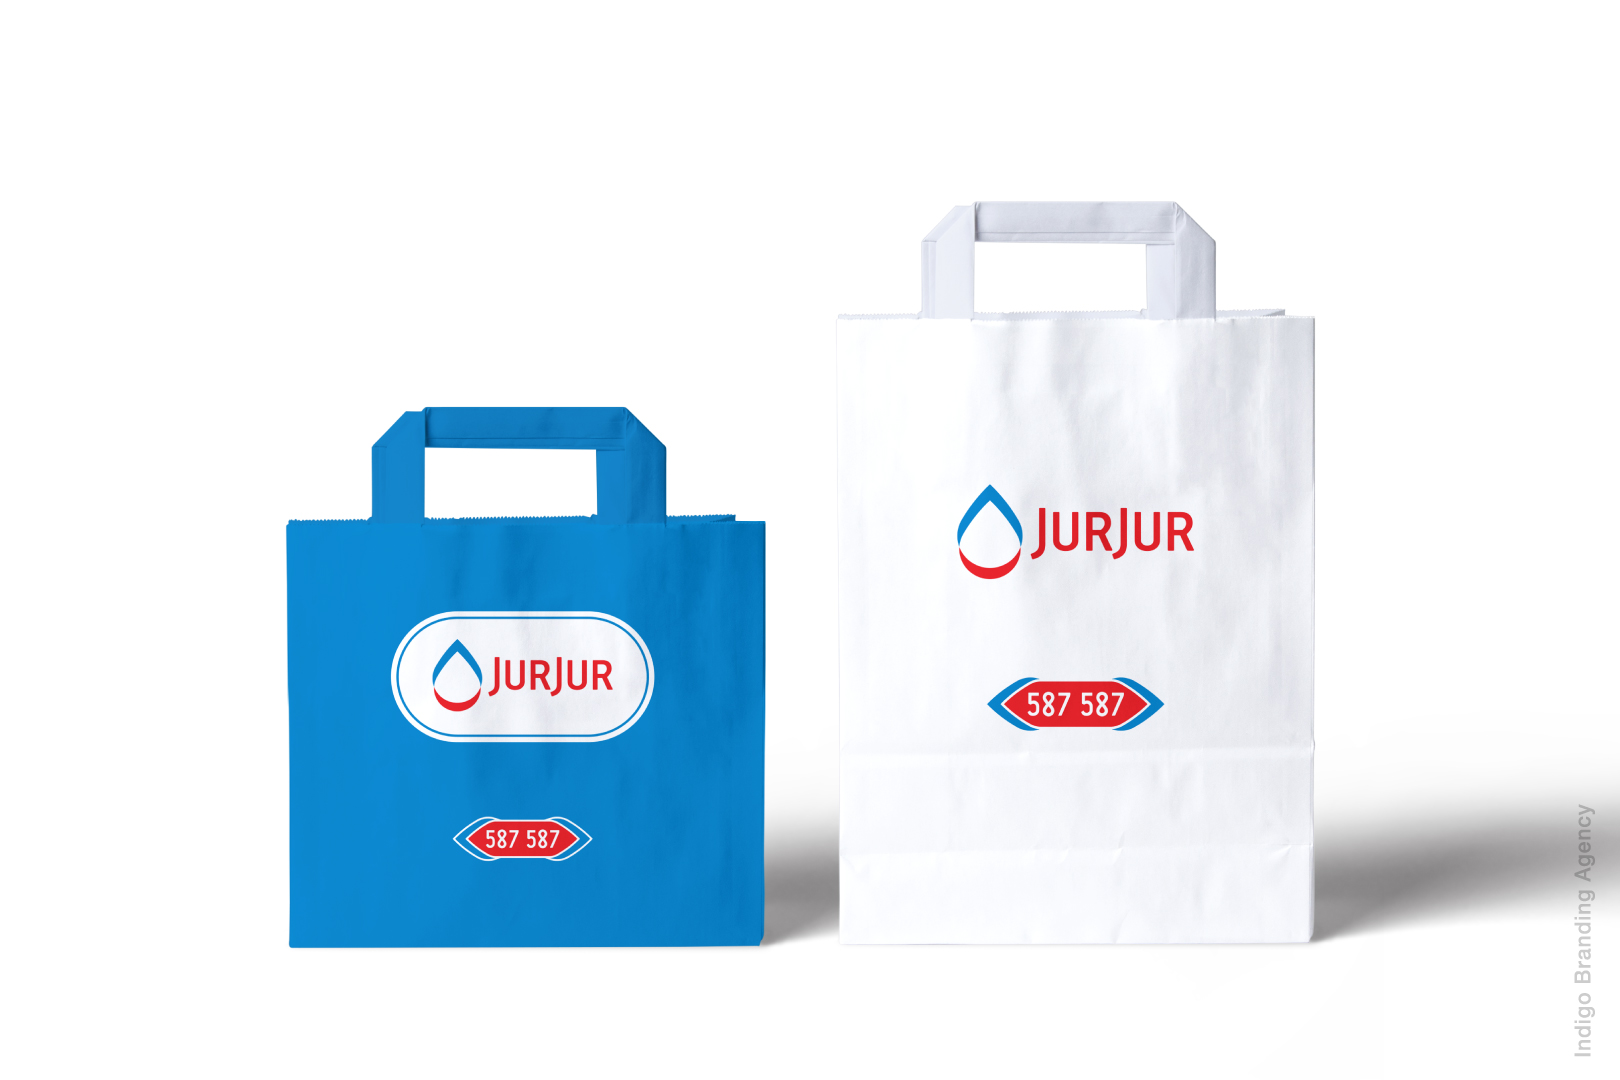 JurJur branding and logo design by Indigo branding